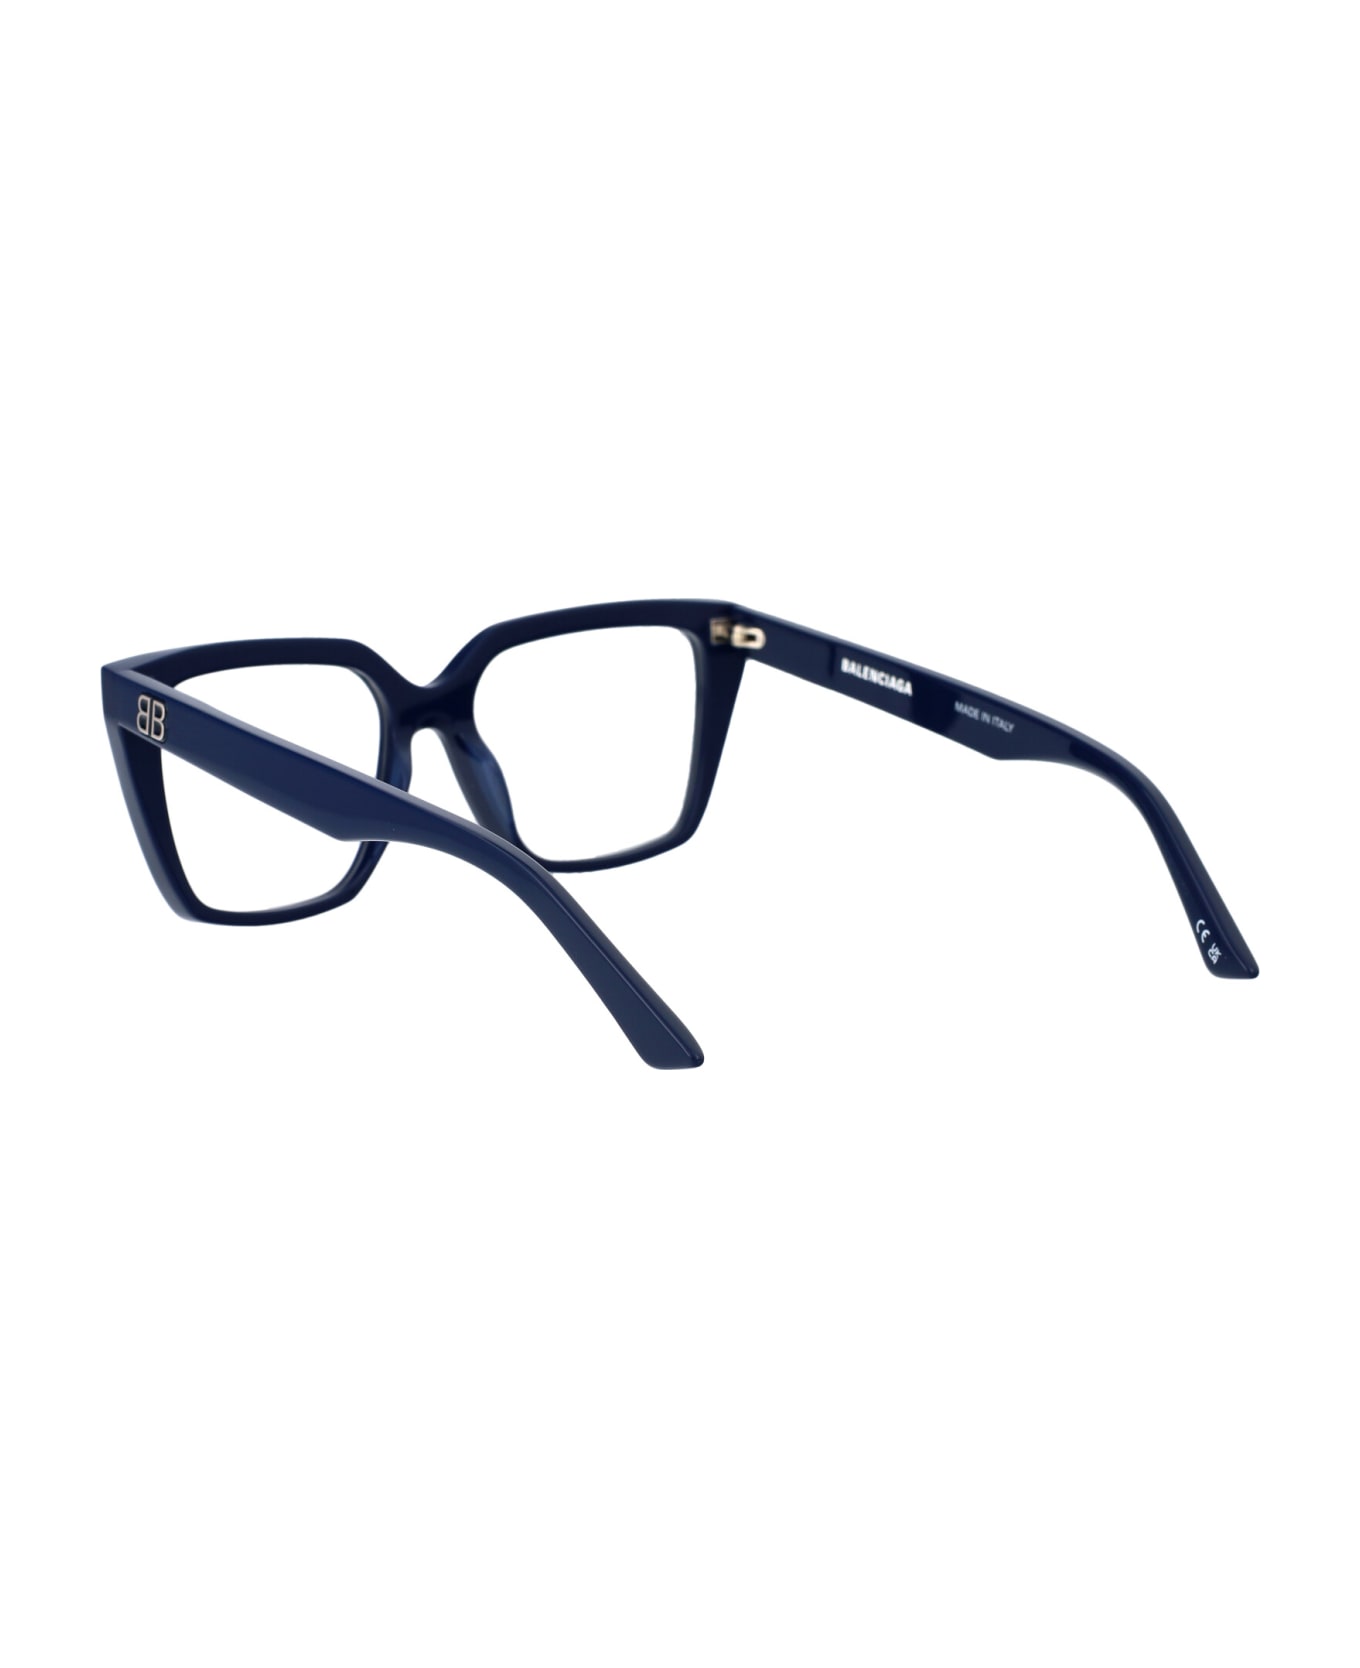 Balenciaga Eyewear Bb0130o Glasses - 010 BLUE BLUE TRANSPARENT